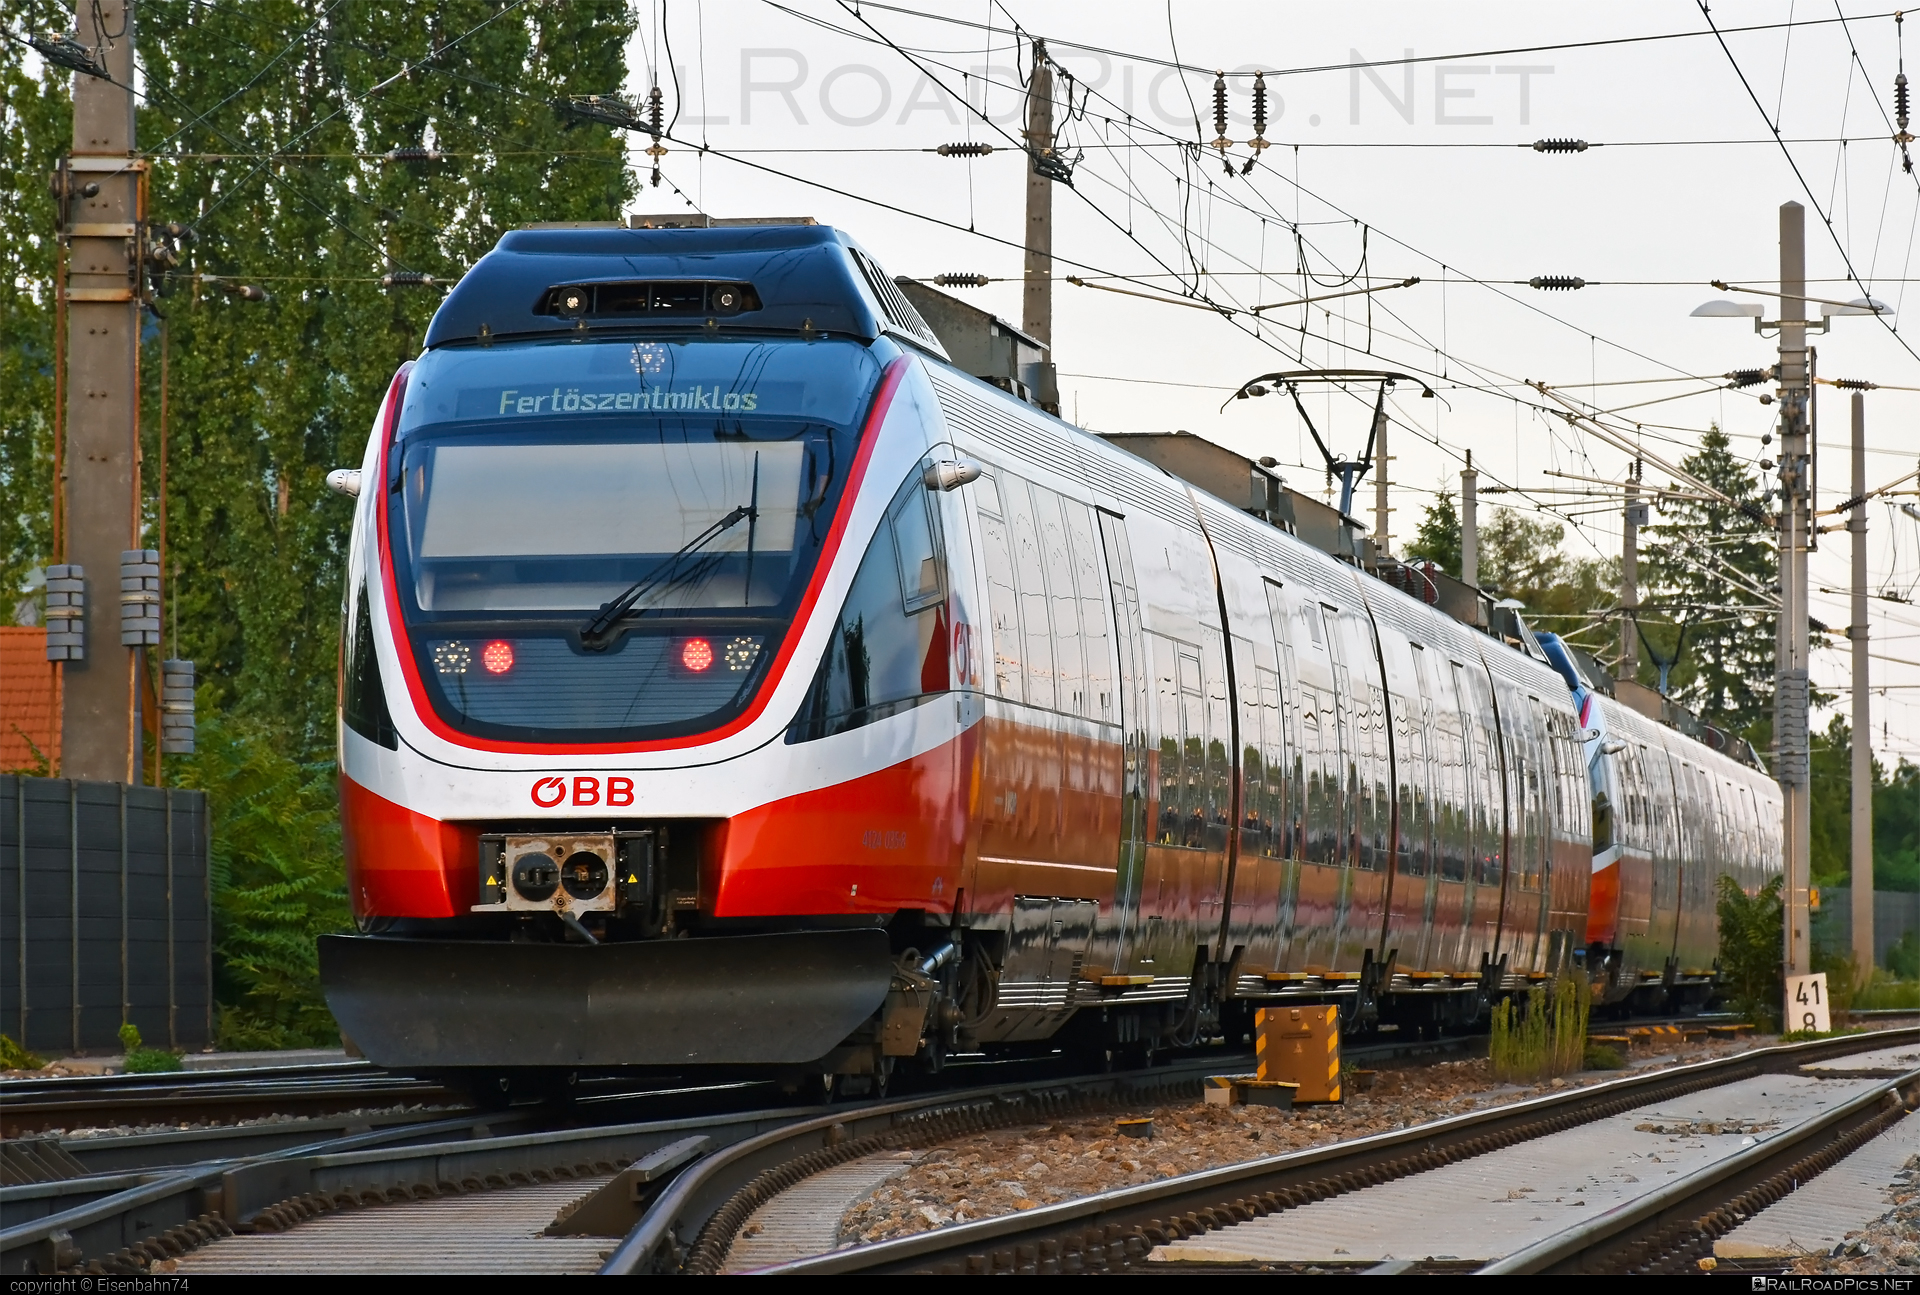 Bombardier Talent - 4124 035-8 operated by Österreichische Bundesbahnen #bombardier #bombardiertalent #cityjet #obb #obbcityjet #osterreichischebundesbahnen